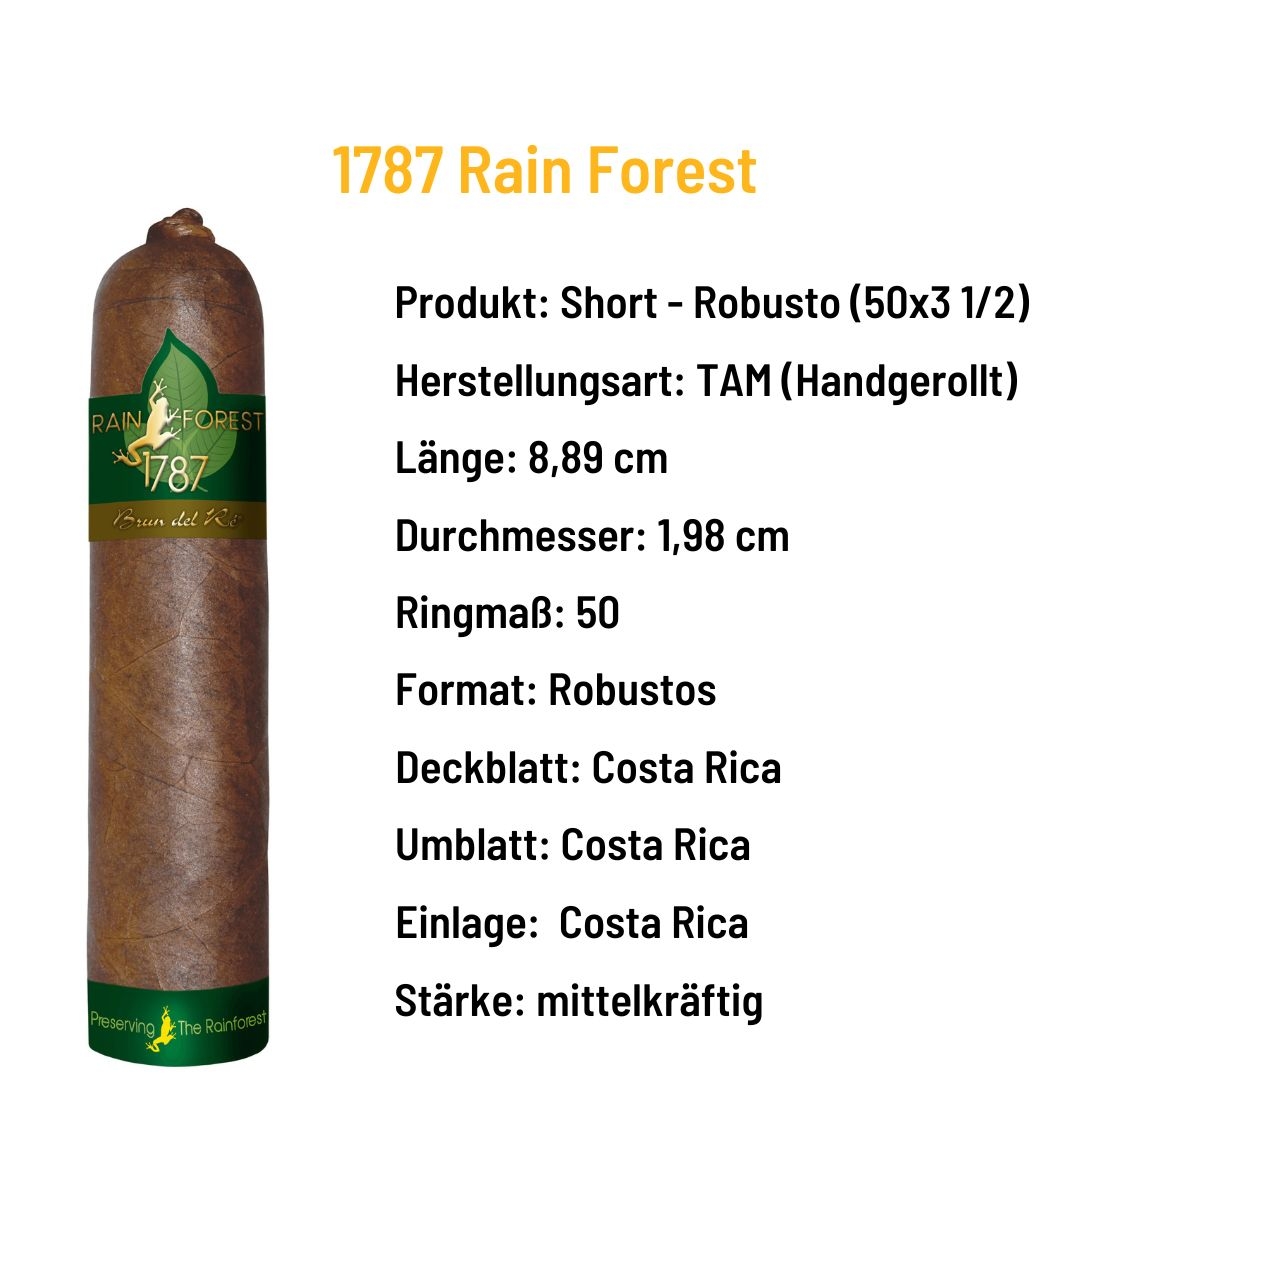 Brun del Ré - 1787 Rain Forest Short Robusto - Costa Rica